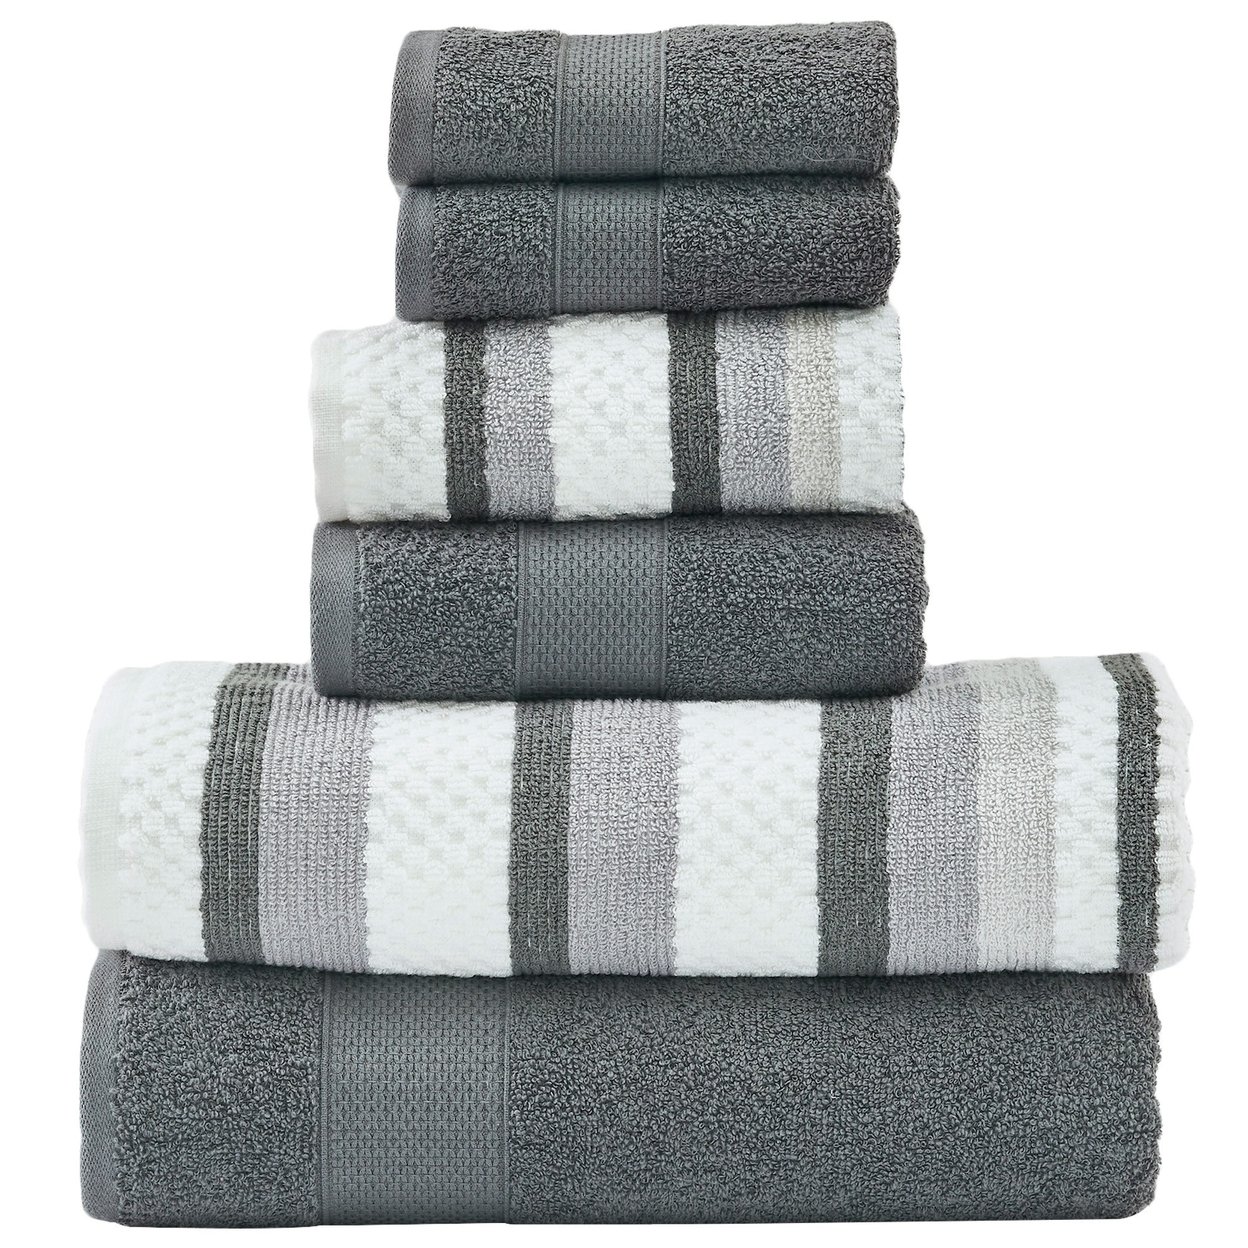 Nyx 6pc Soft Cotton Towel Set, Striped, White, Dark Gray By The Urban Port- Saltoro Sherpi